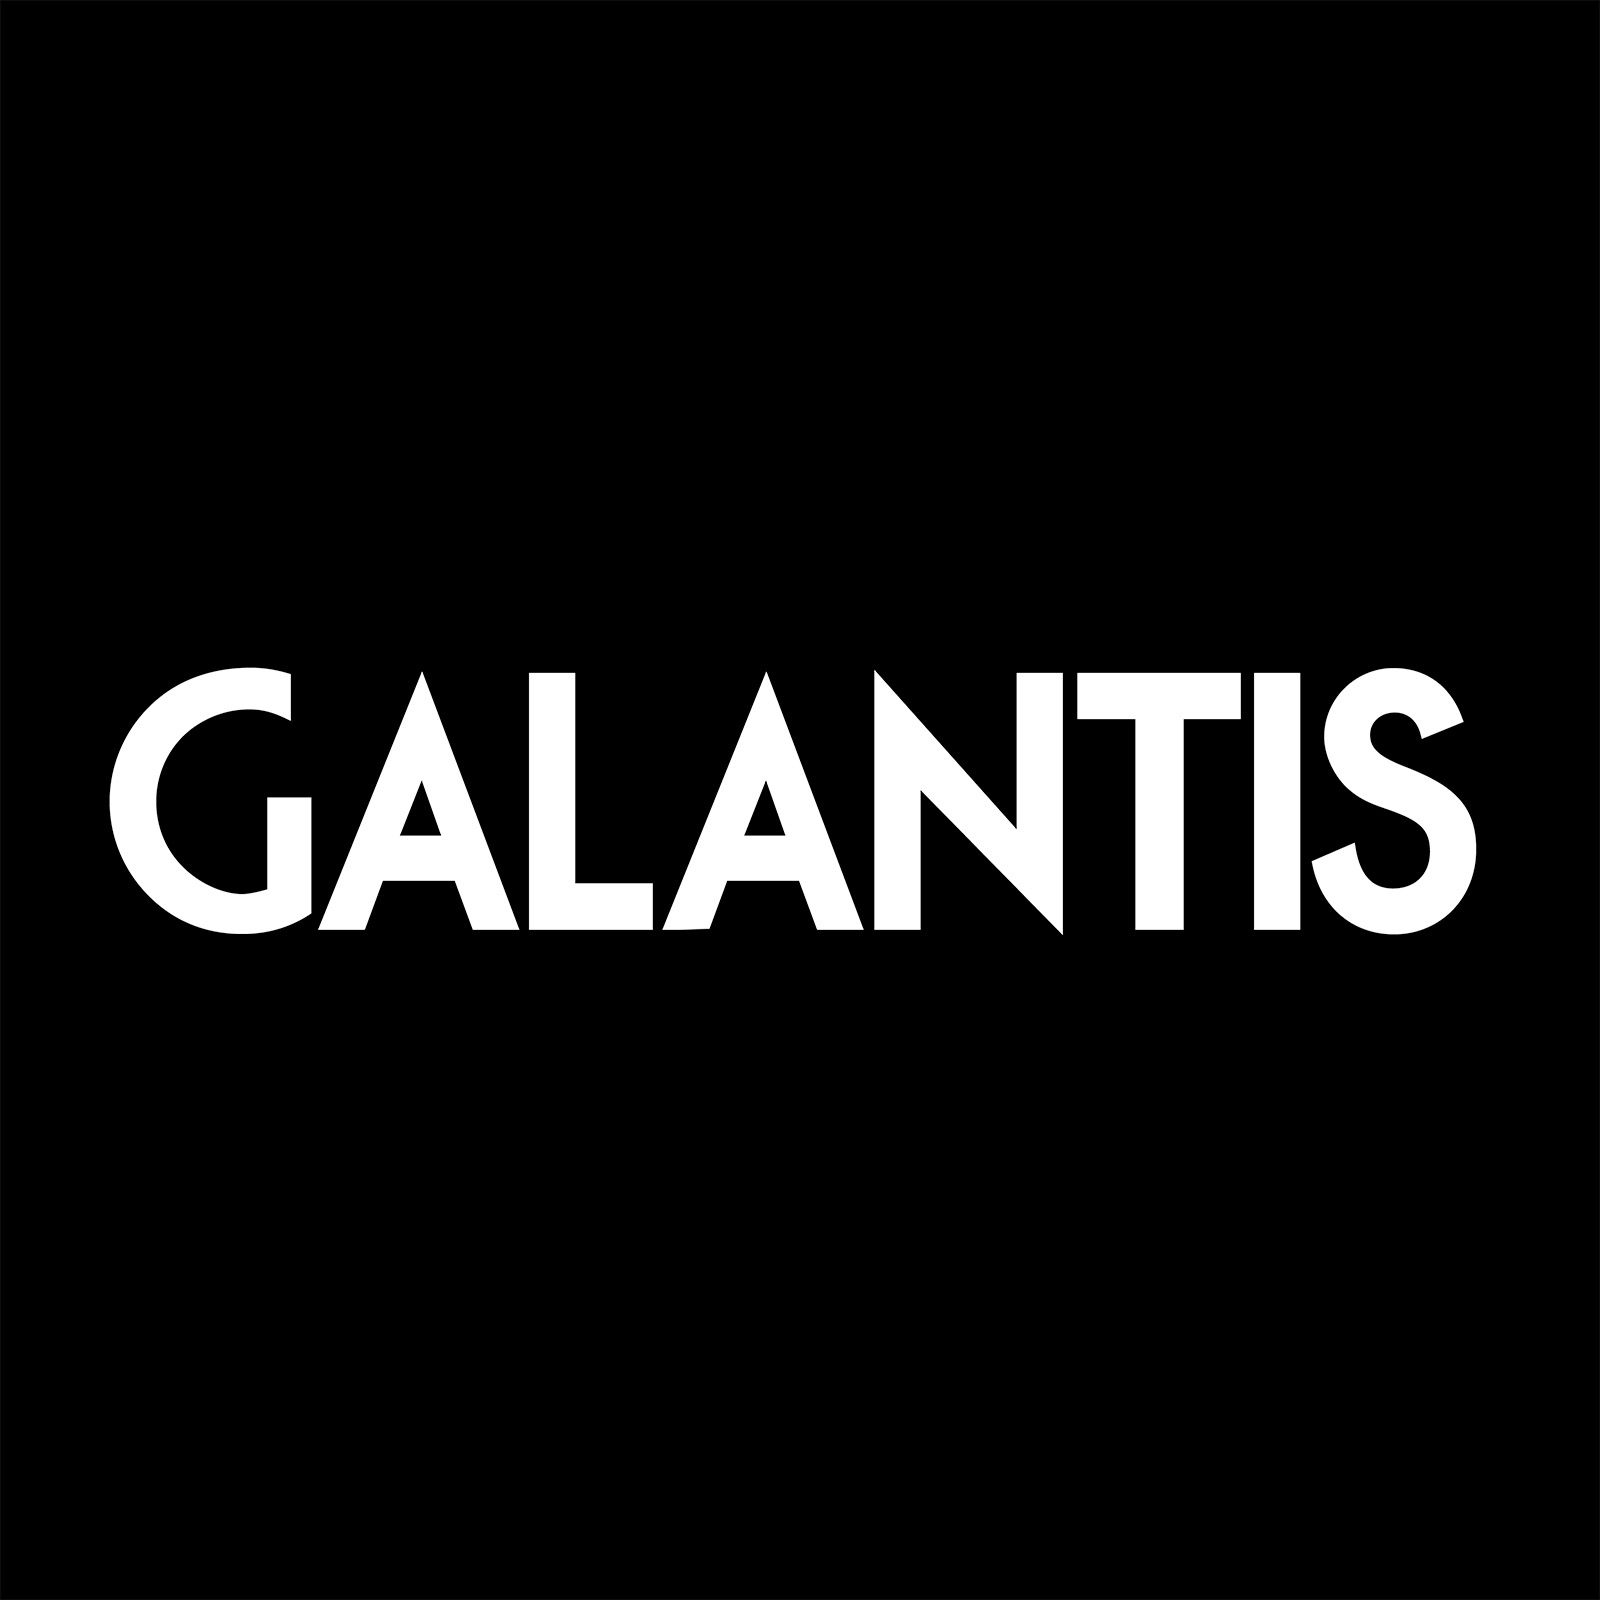 Galantis [community logo]